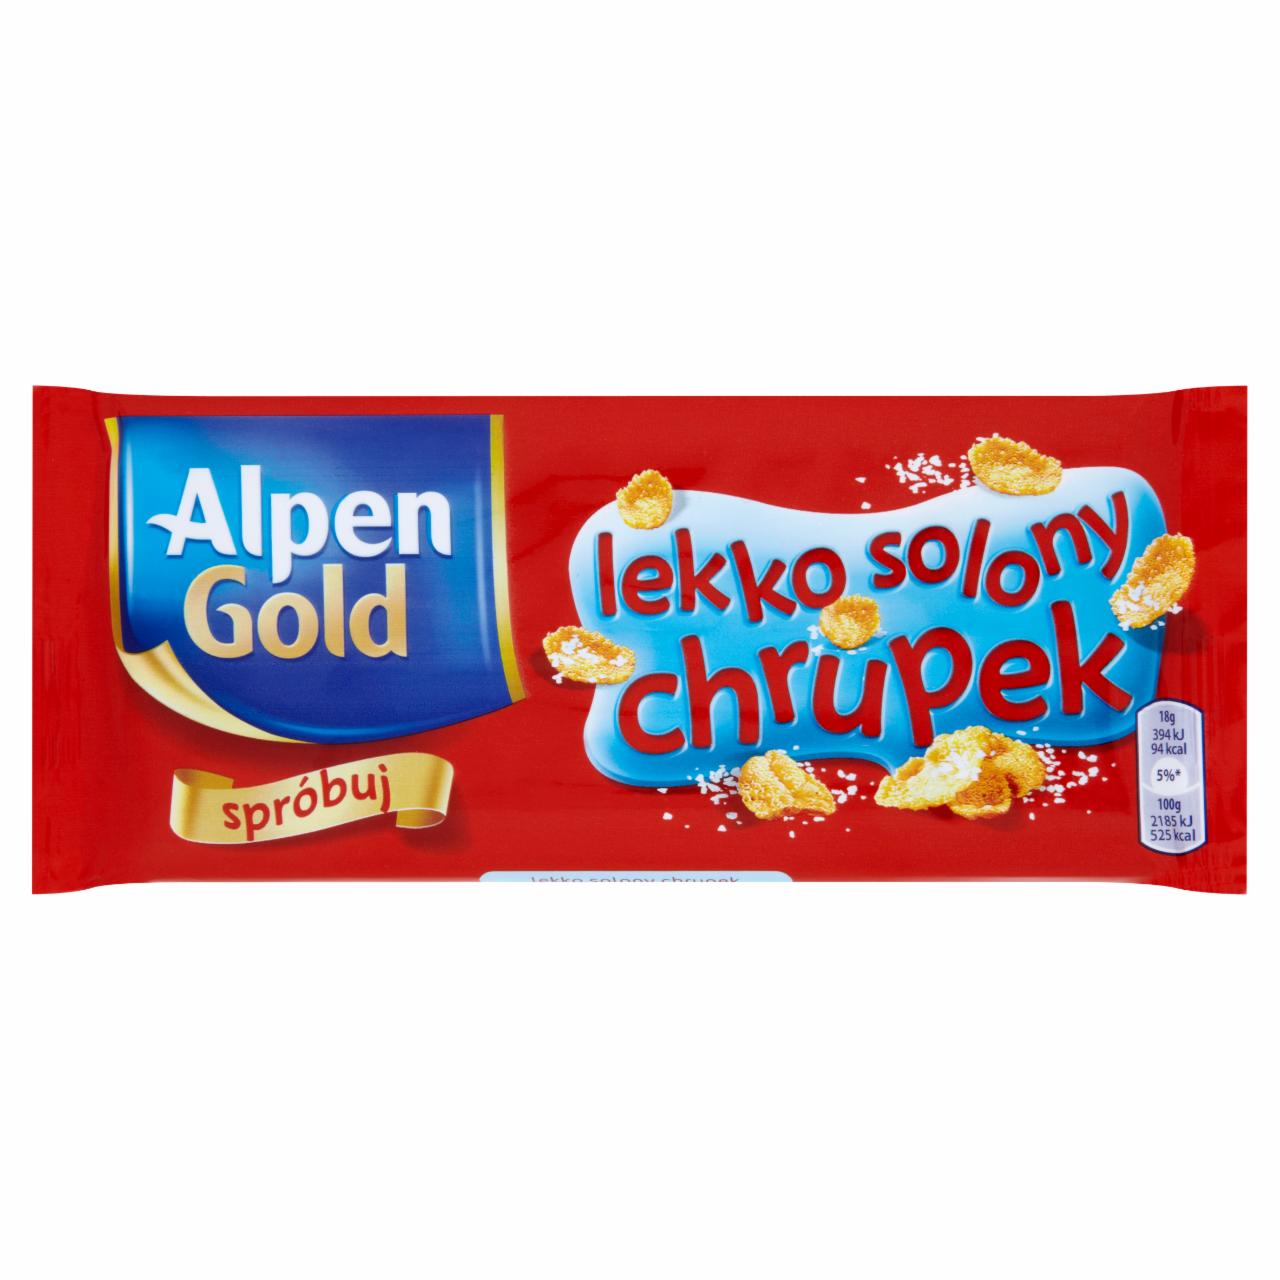 Zdjęcia - Alpen Gold Lekko solony chrupek Czekolada 90 g